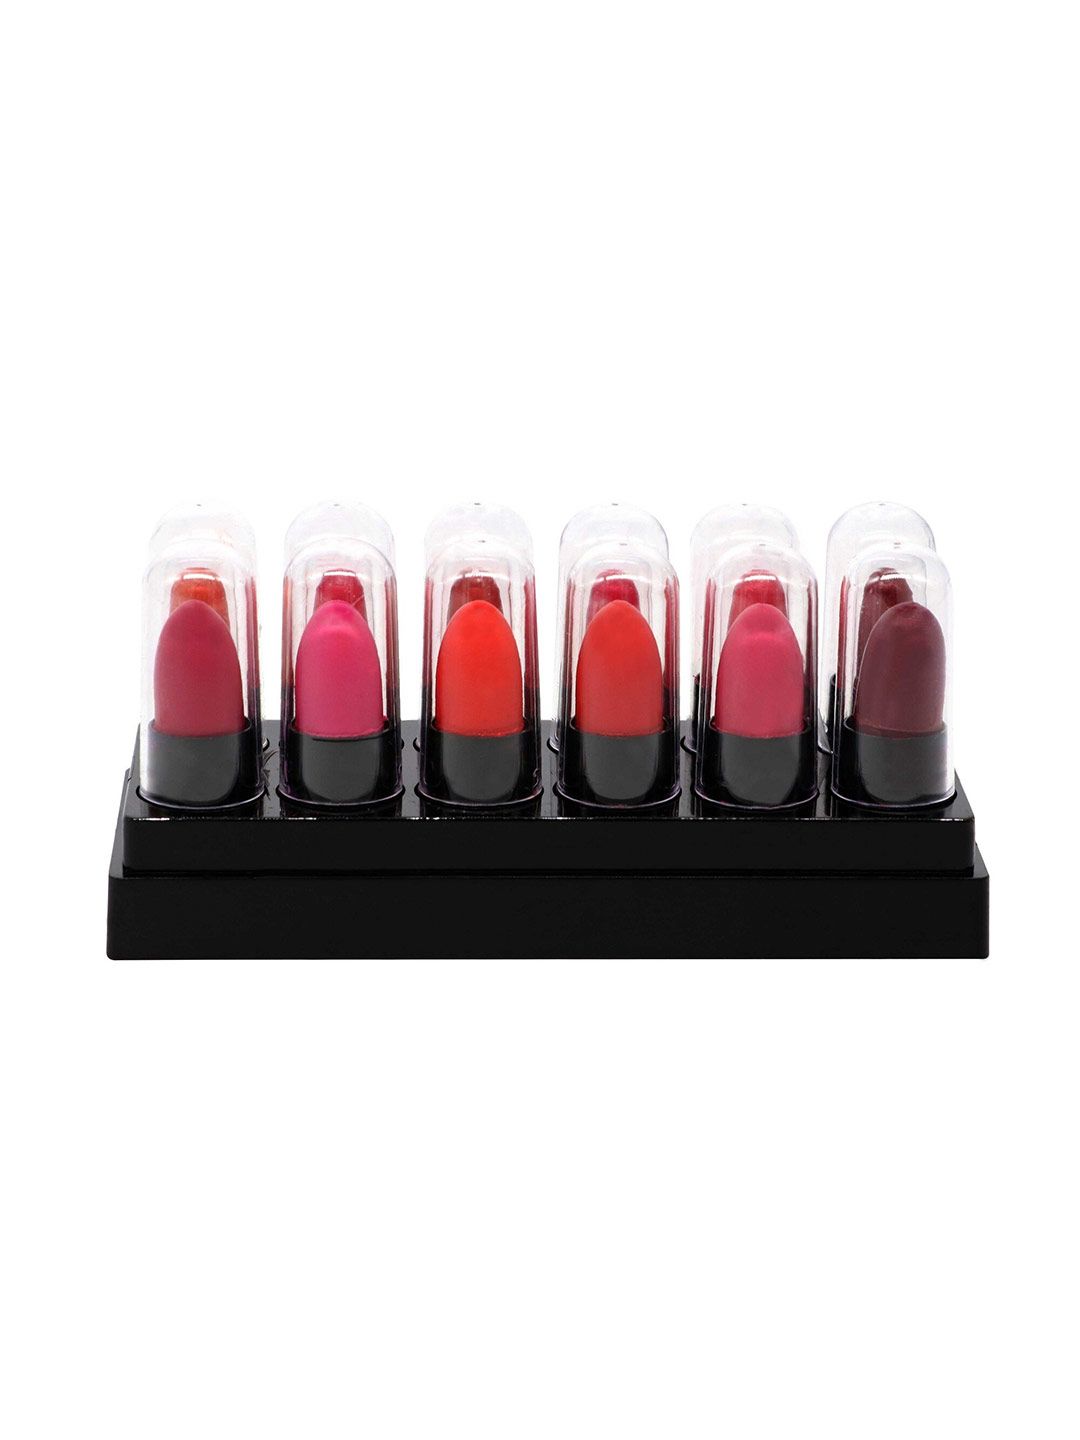 MATTLOOK Women Super Mini Lipsticks 12pcs Pack Price in India